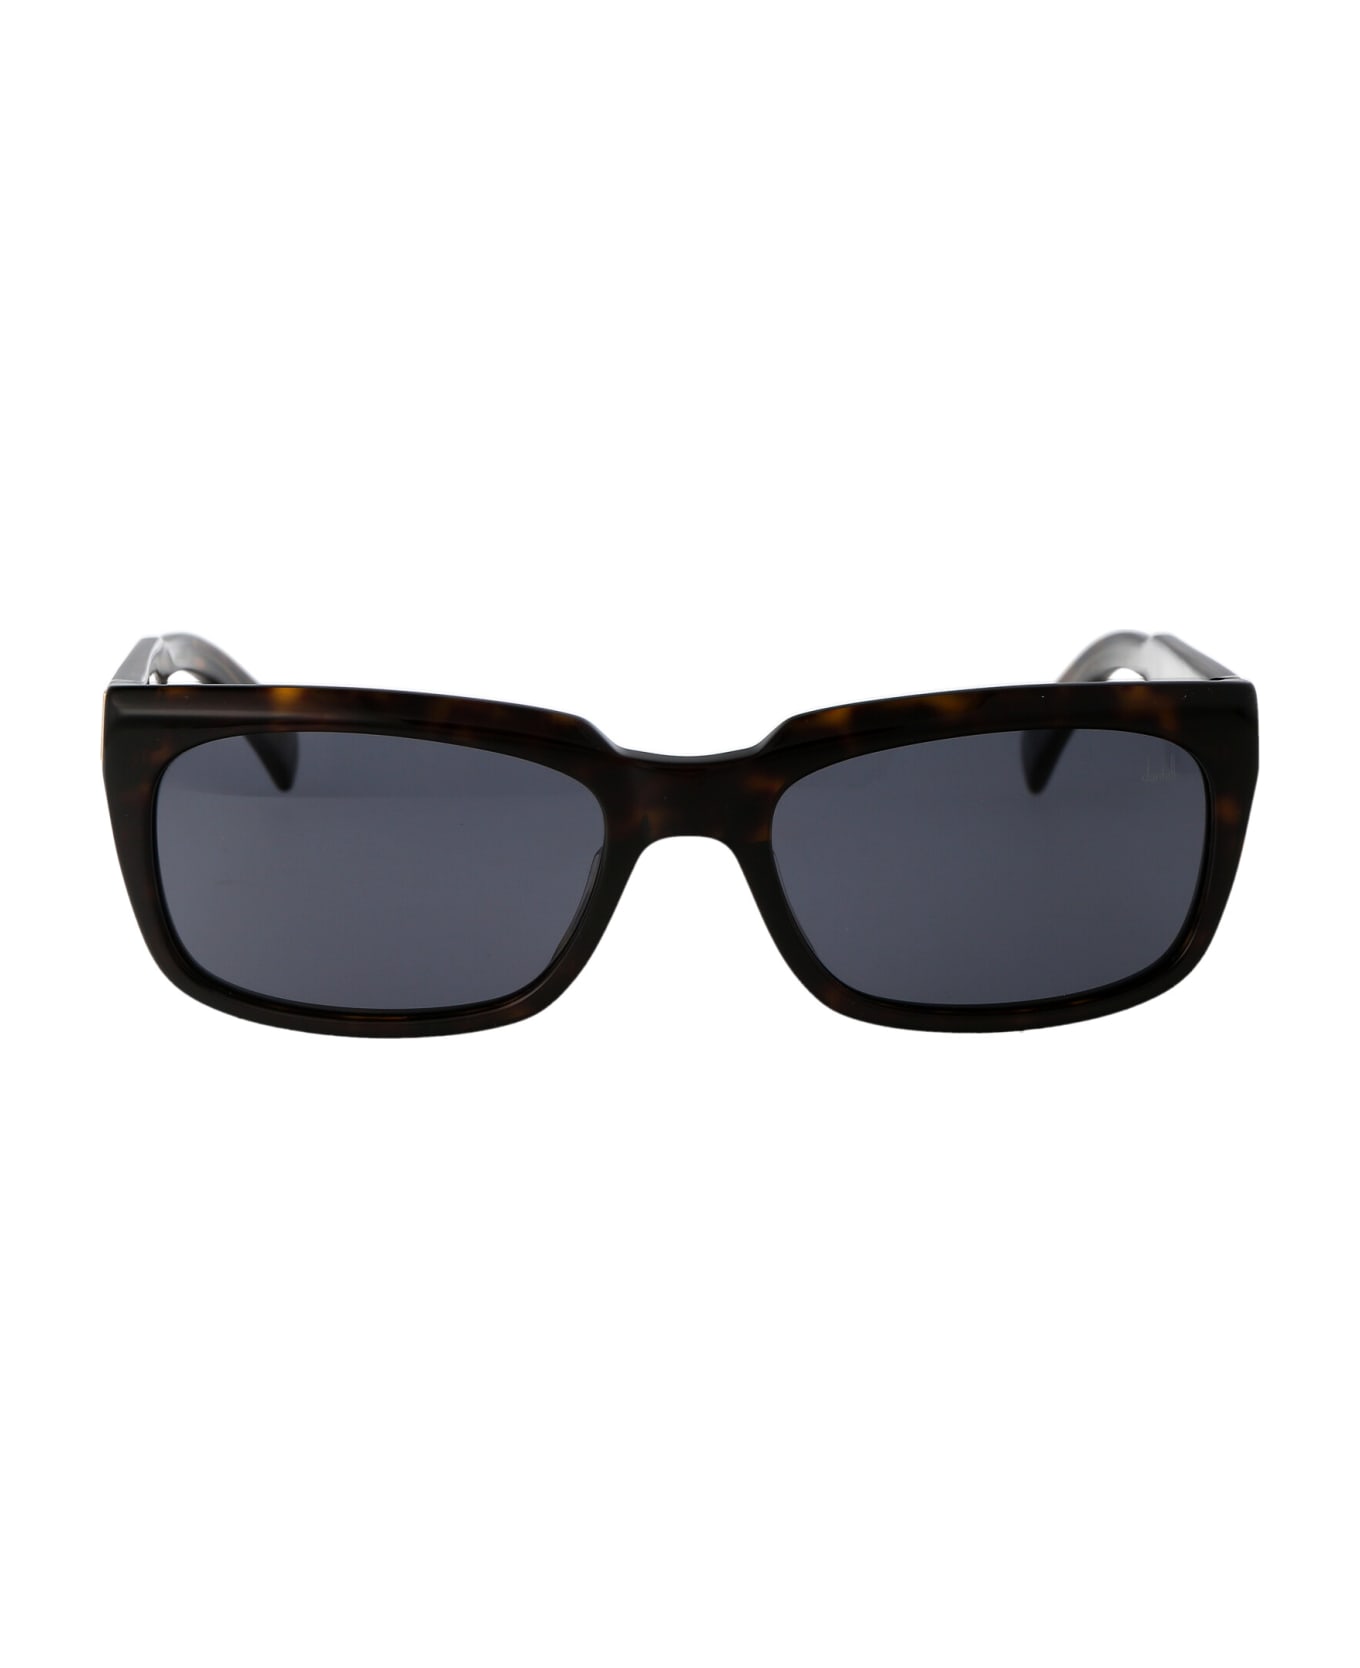 Dunhill Du0056s Sunglasses - 002 HAVANA HAVANA GREY